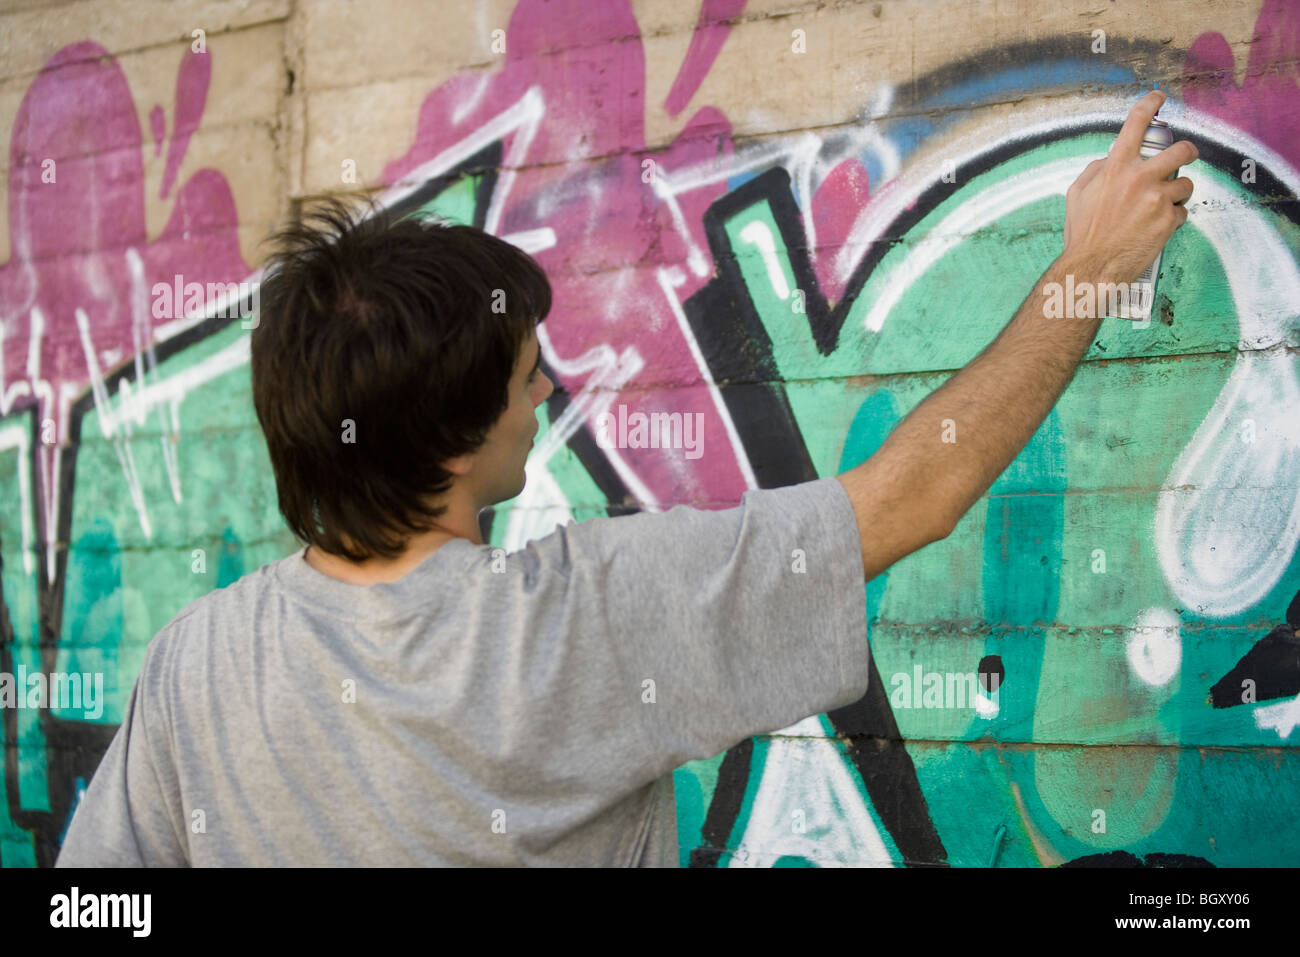 Young man spray painting graffiti mural Stock Photo